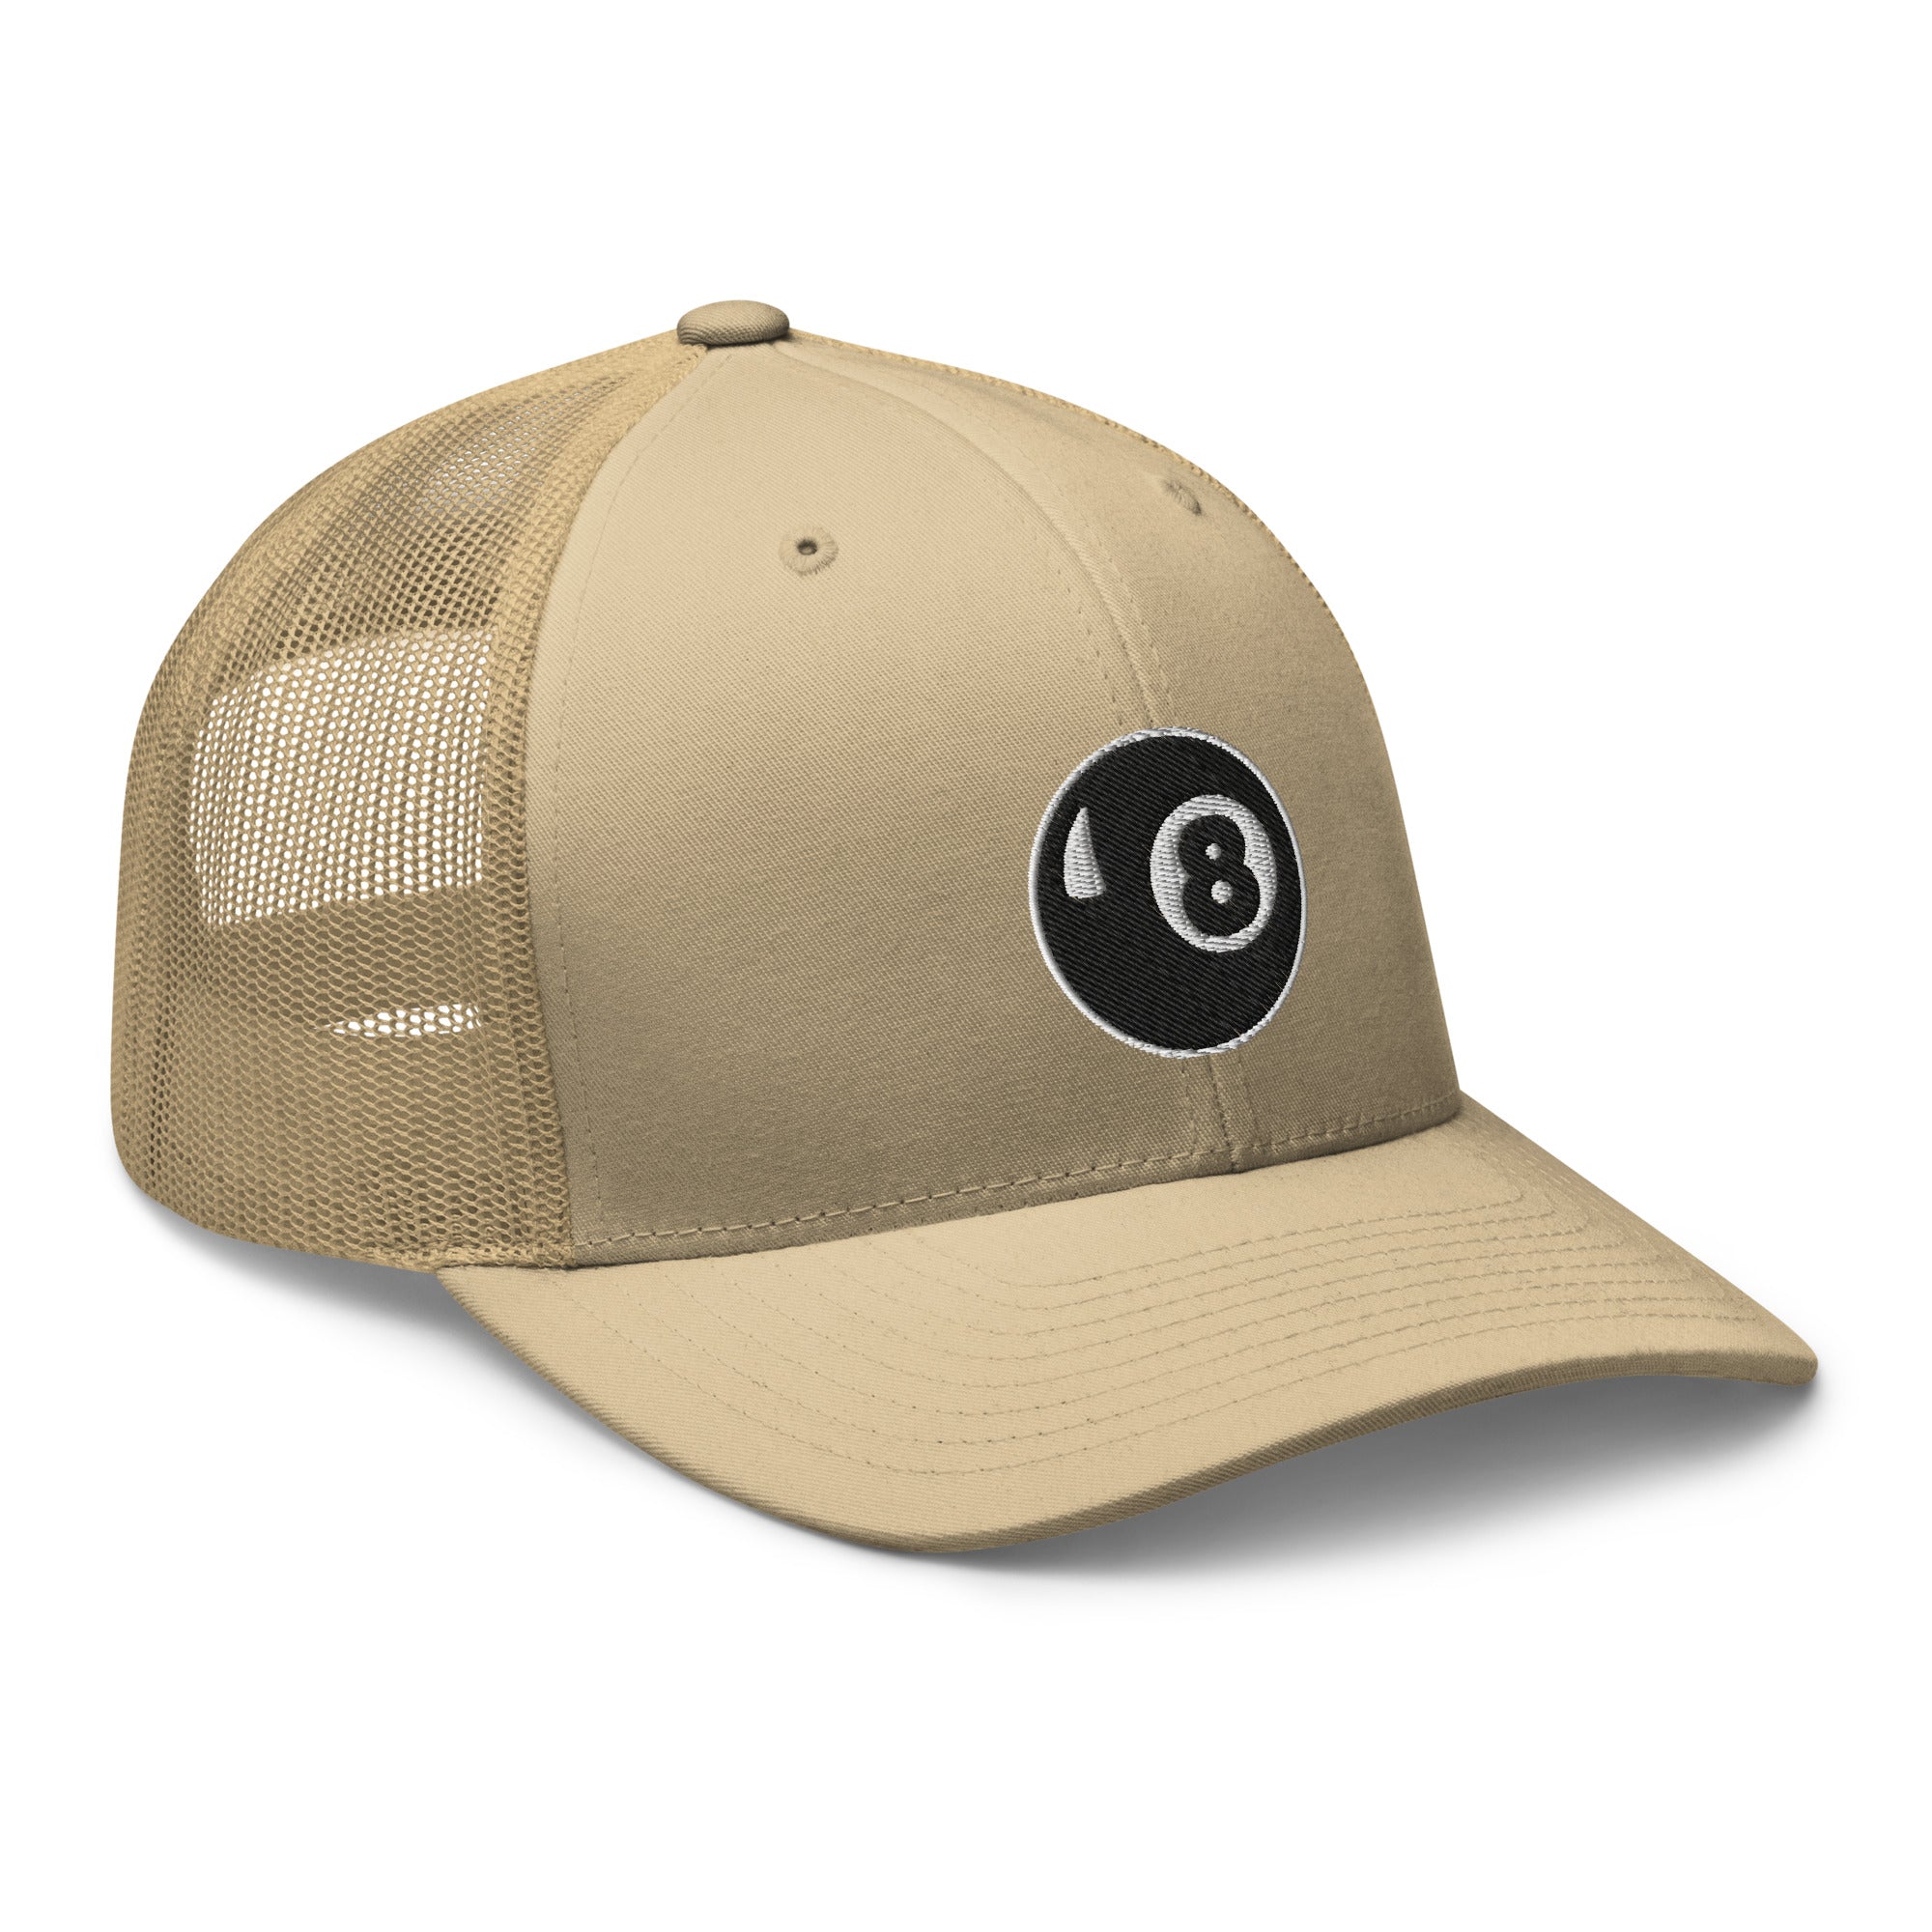 8 Ball Pool Billiards Embroidered Retro Trucker Cap Snapback Hat